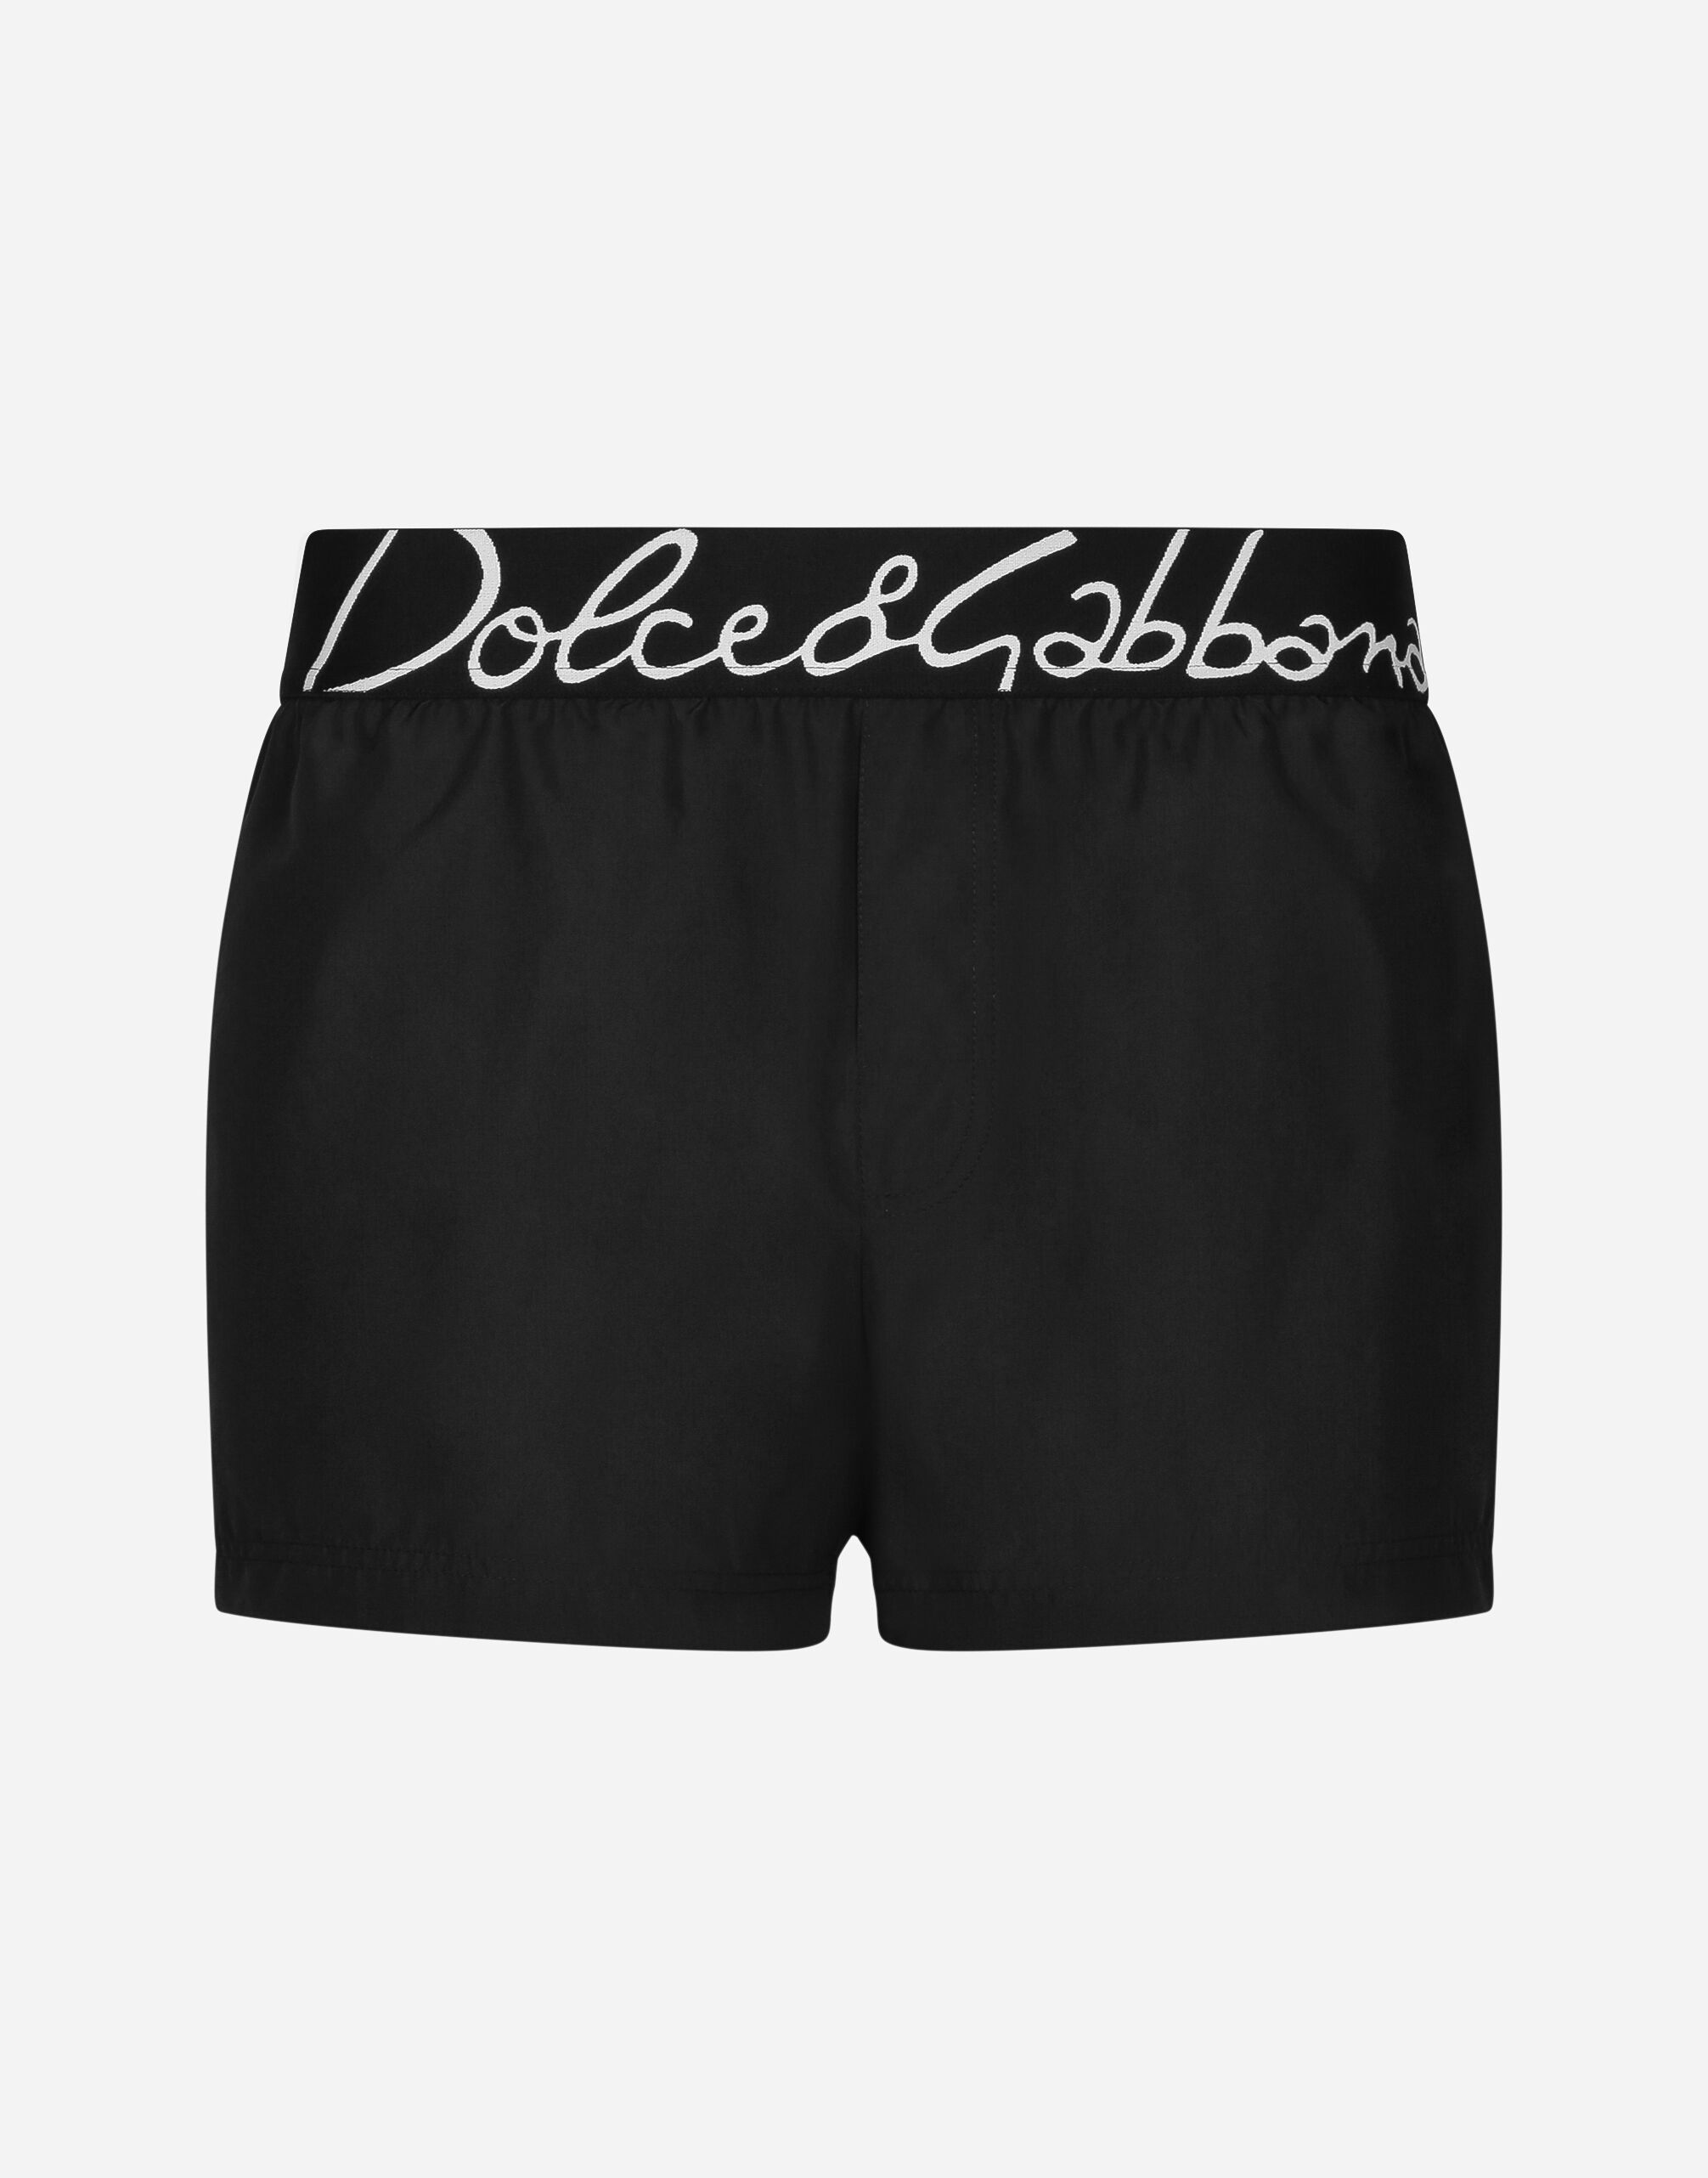 Dolce & Gabbana شورت سباحة قصير بشعار Dolce&Gabbana مطبعة M4A13TFIM4R